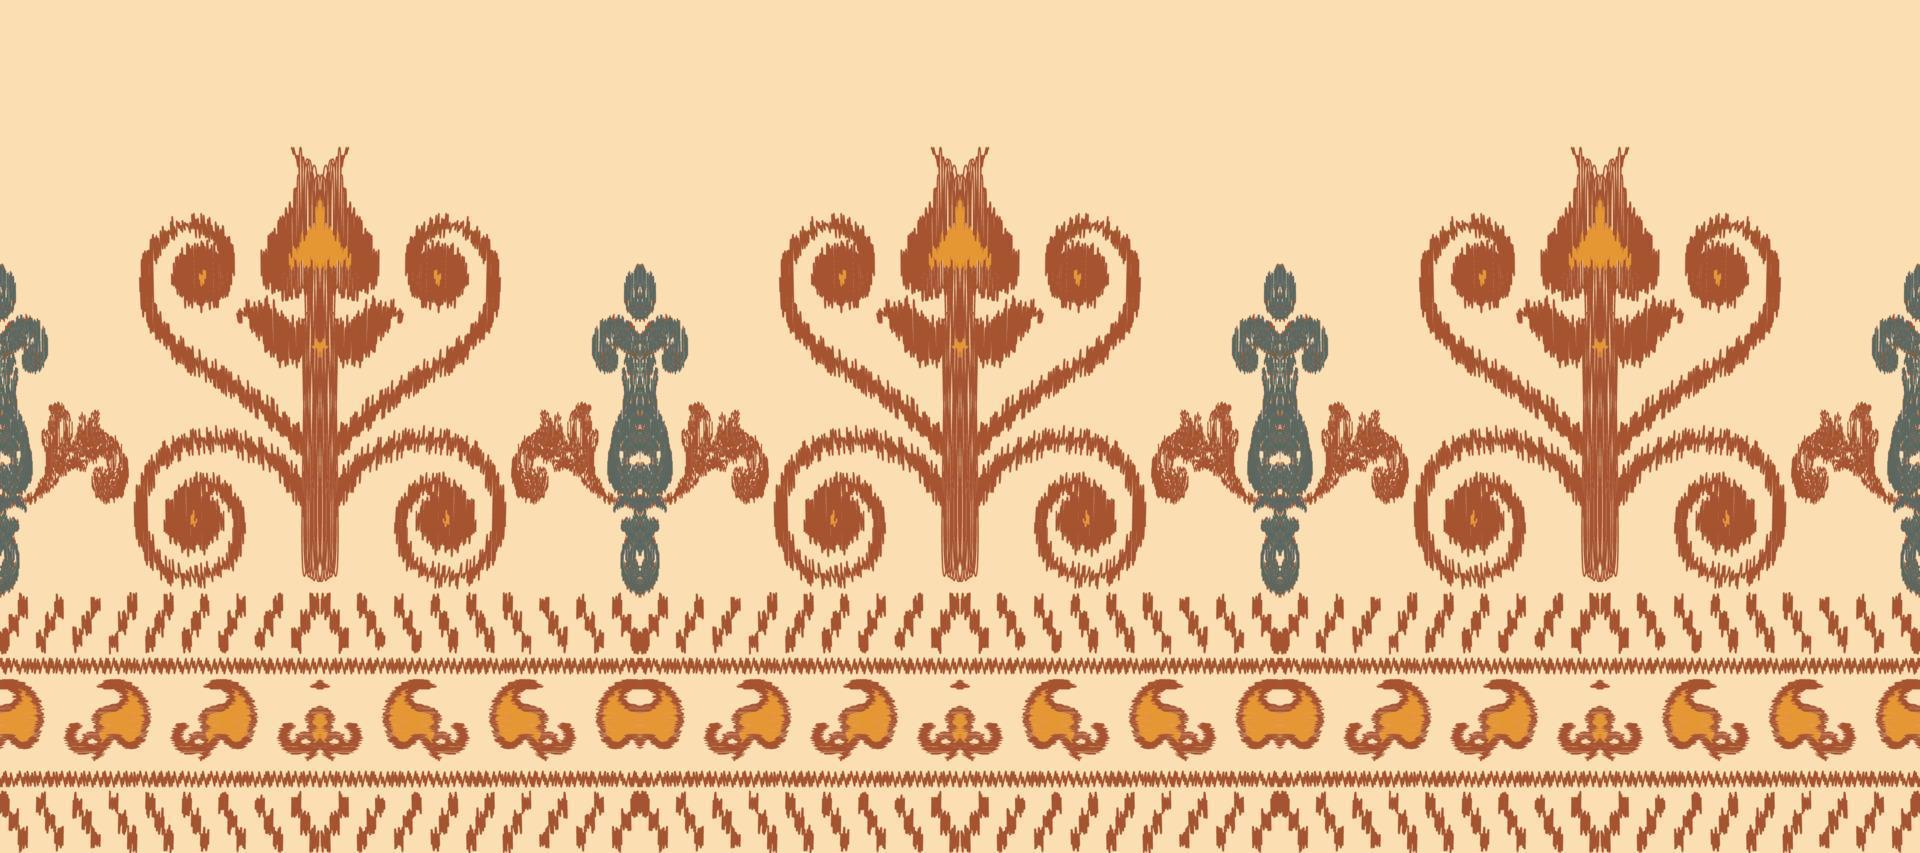 africano ikat cachemir bordado. batik textil ikat marco sin costura modelo digital vector diseño para impresión sari curti borneo tela frontera cepillo elegante